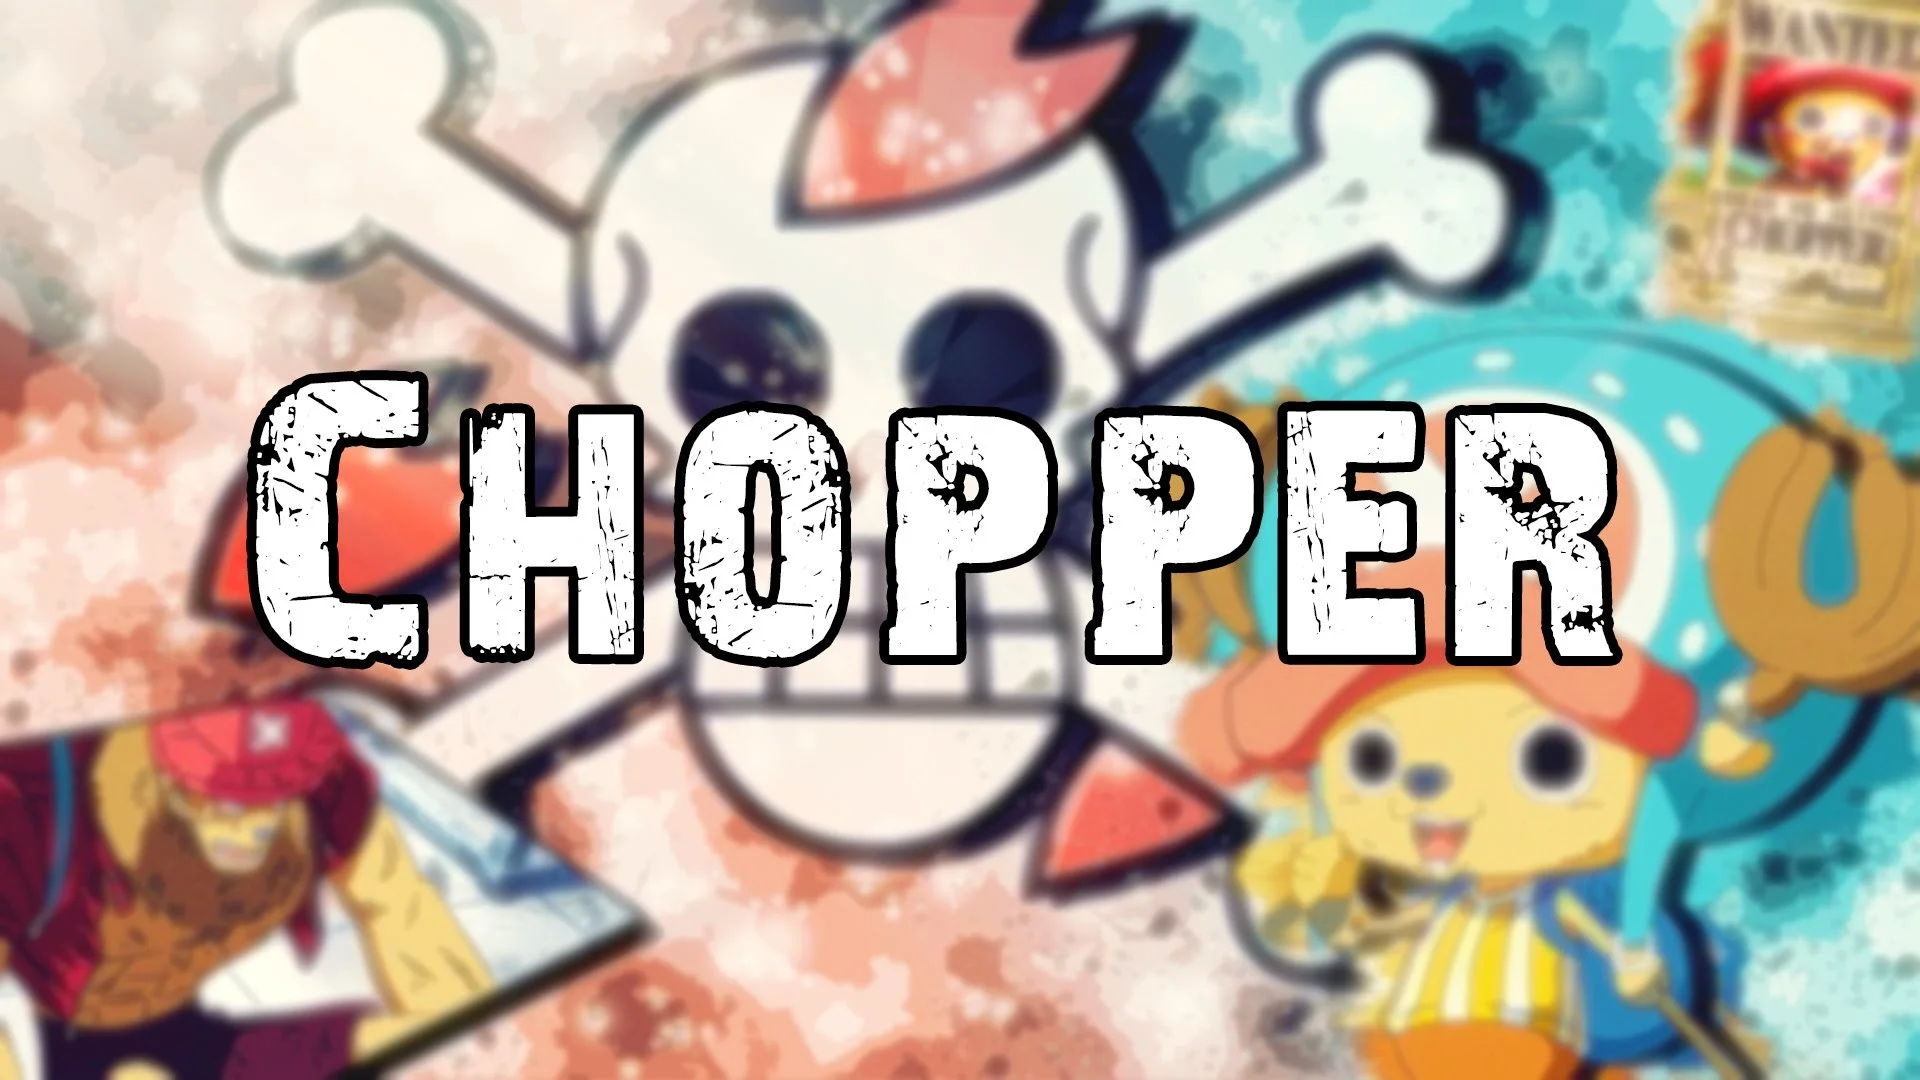 Wallpaper | Chopper | Photoshop | Speed Art | One Piece